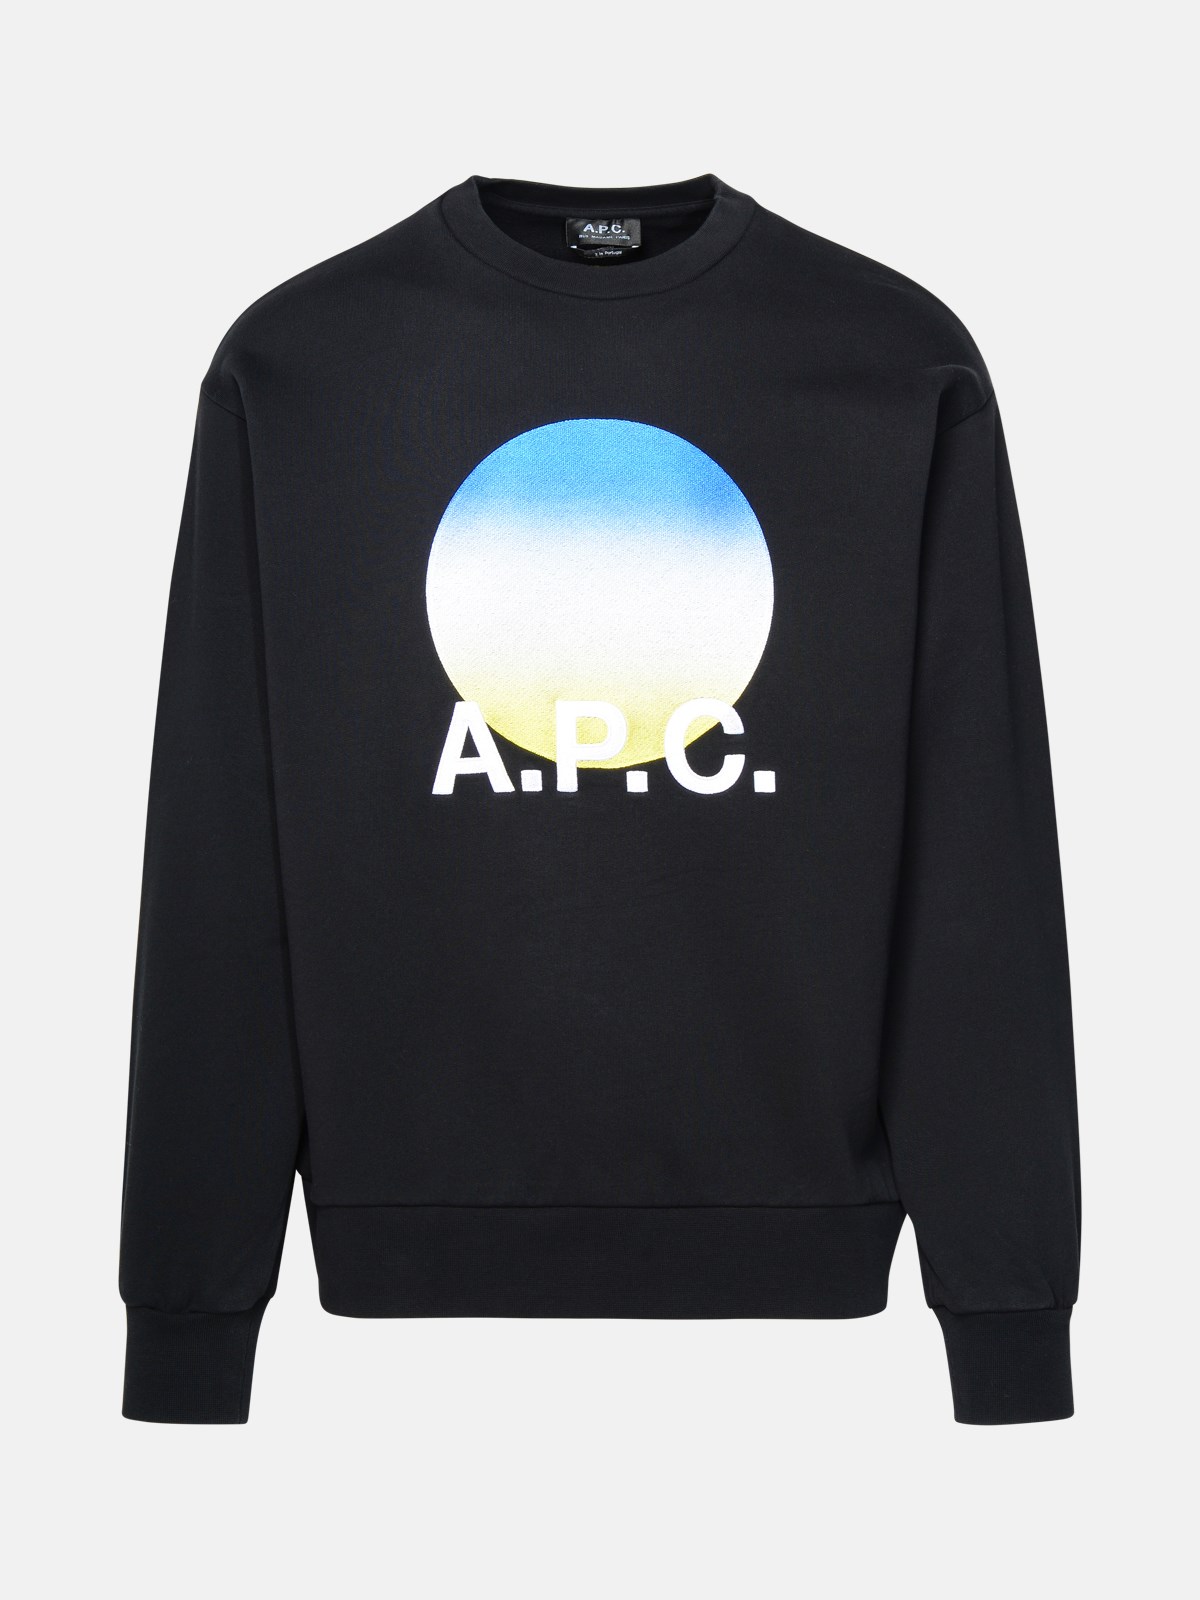 A.p.c. Black Cotton Sweatshirt